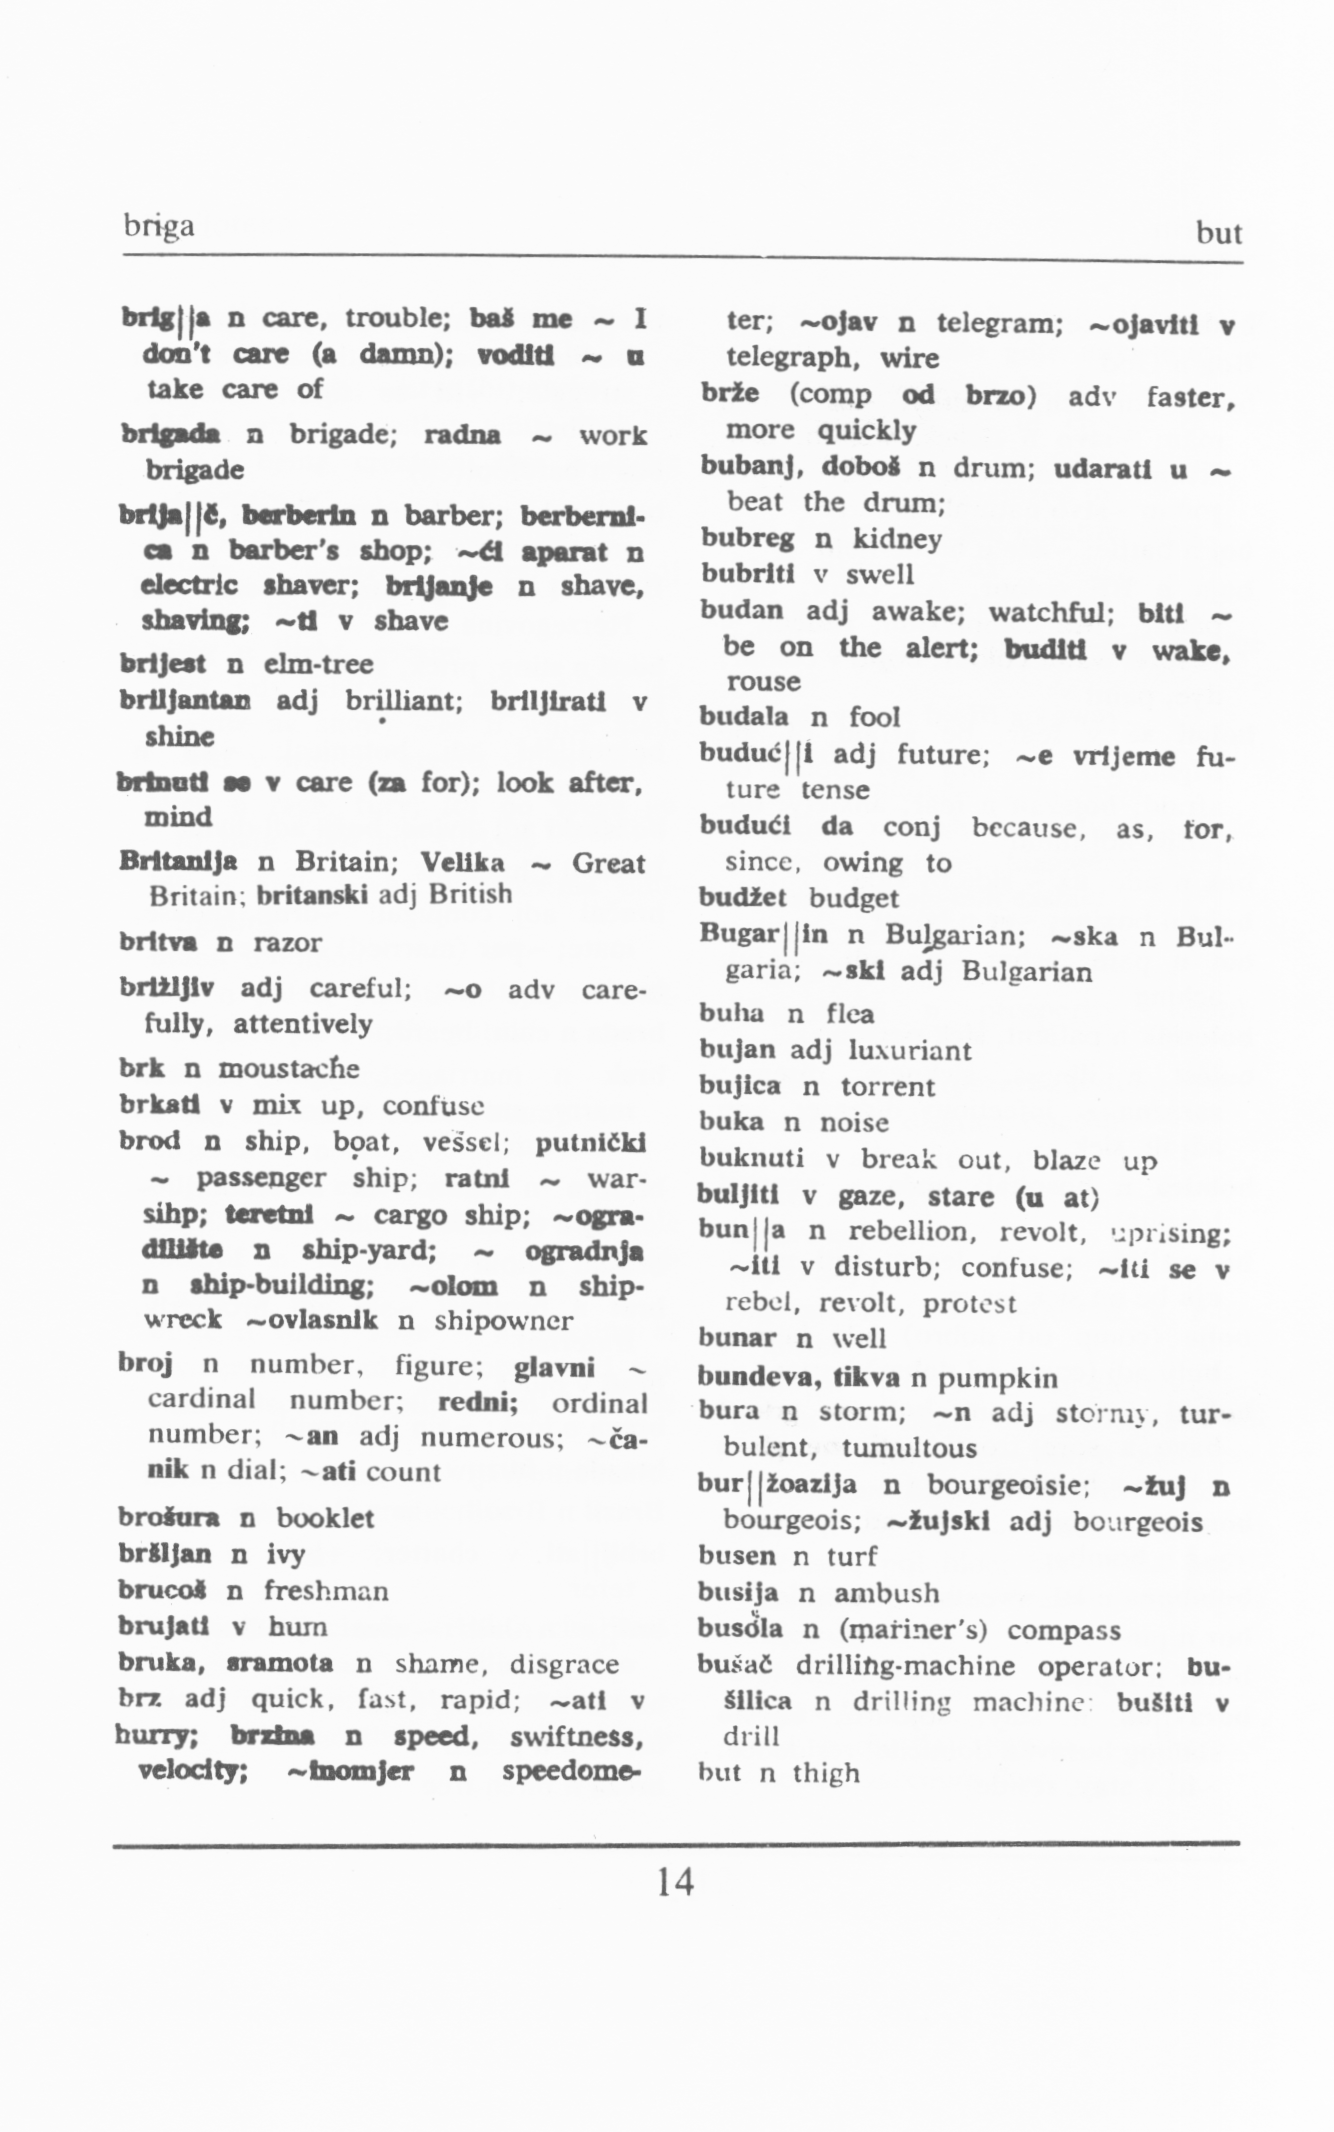 Croatian-English and English-Croatian Dictionary